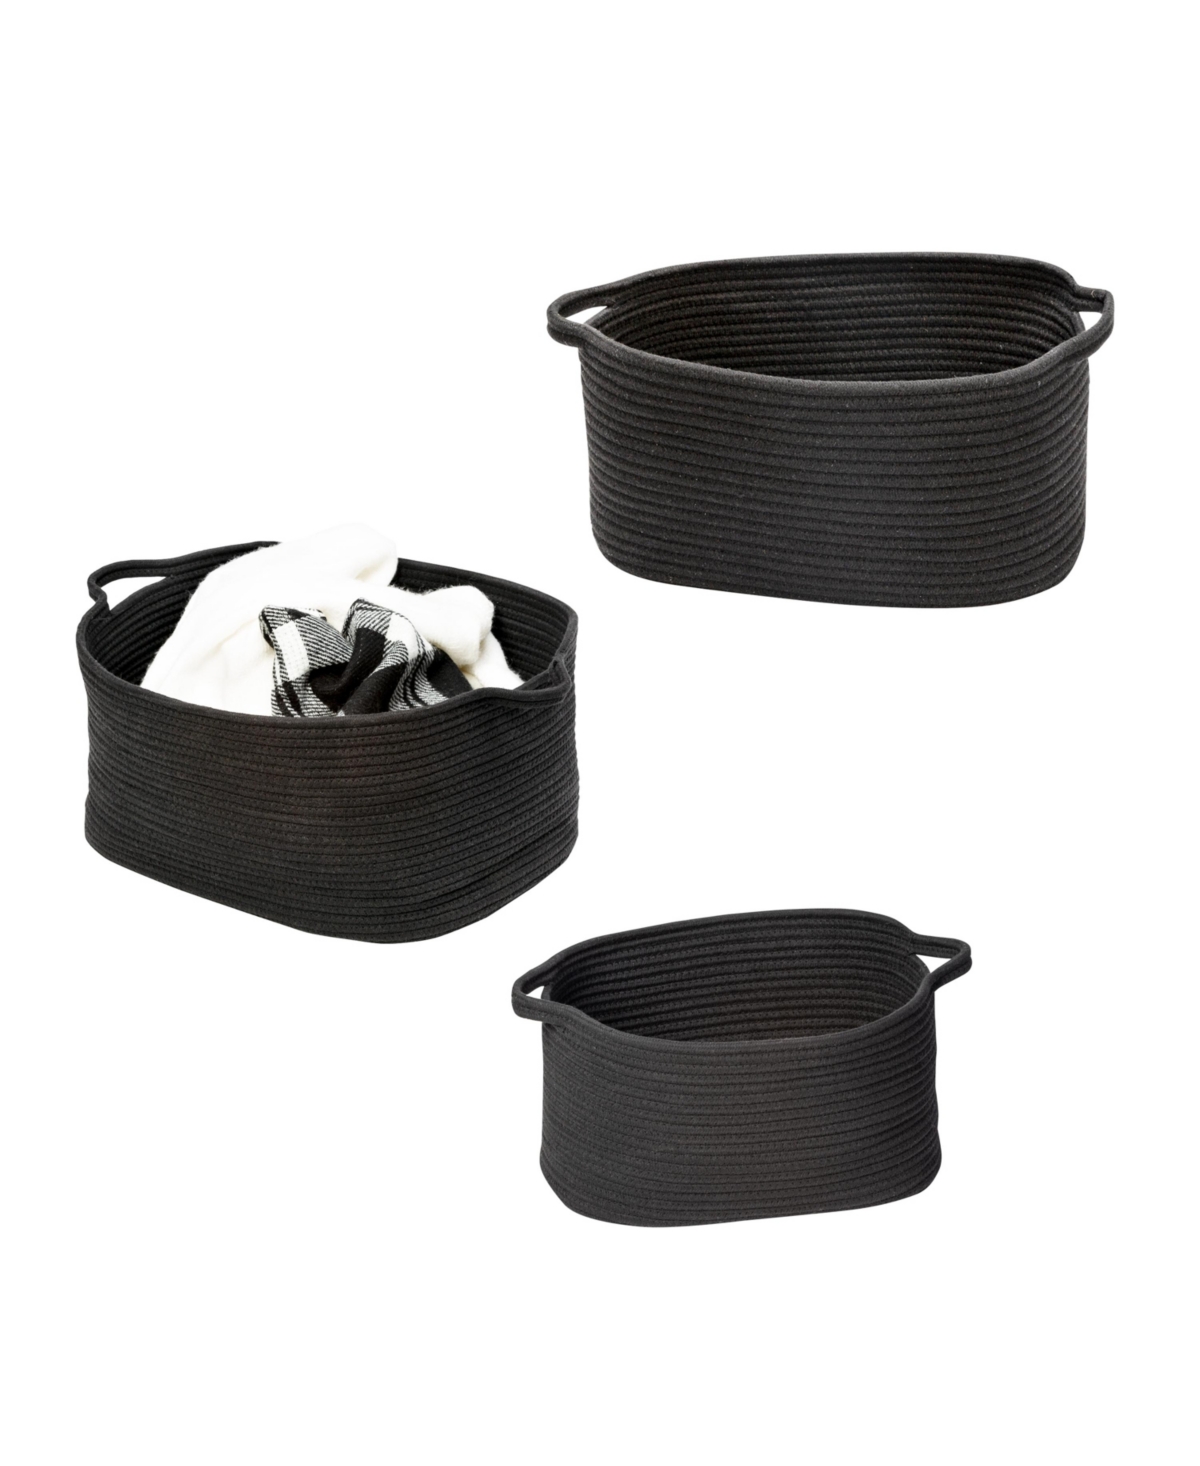 Set of 3 Black Cotton Coil Baskets - Black